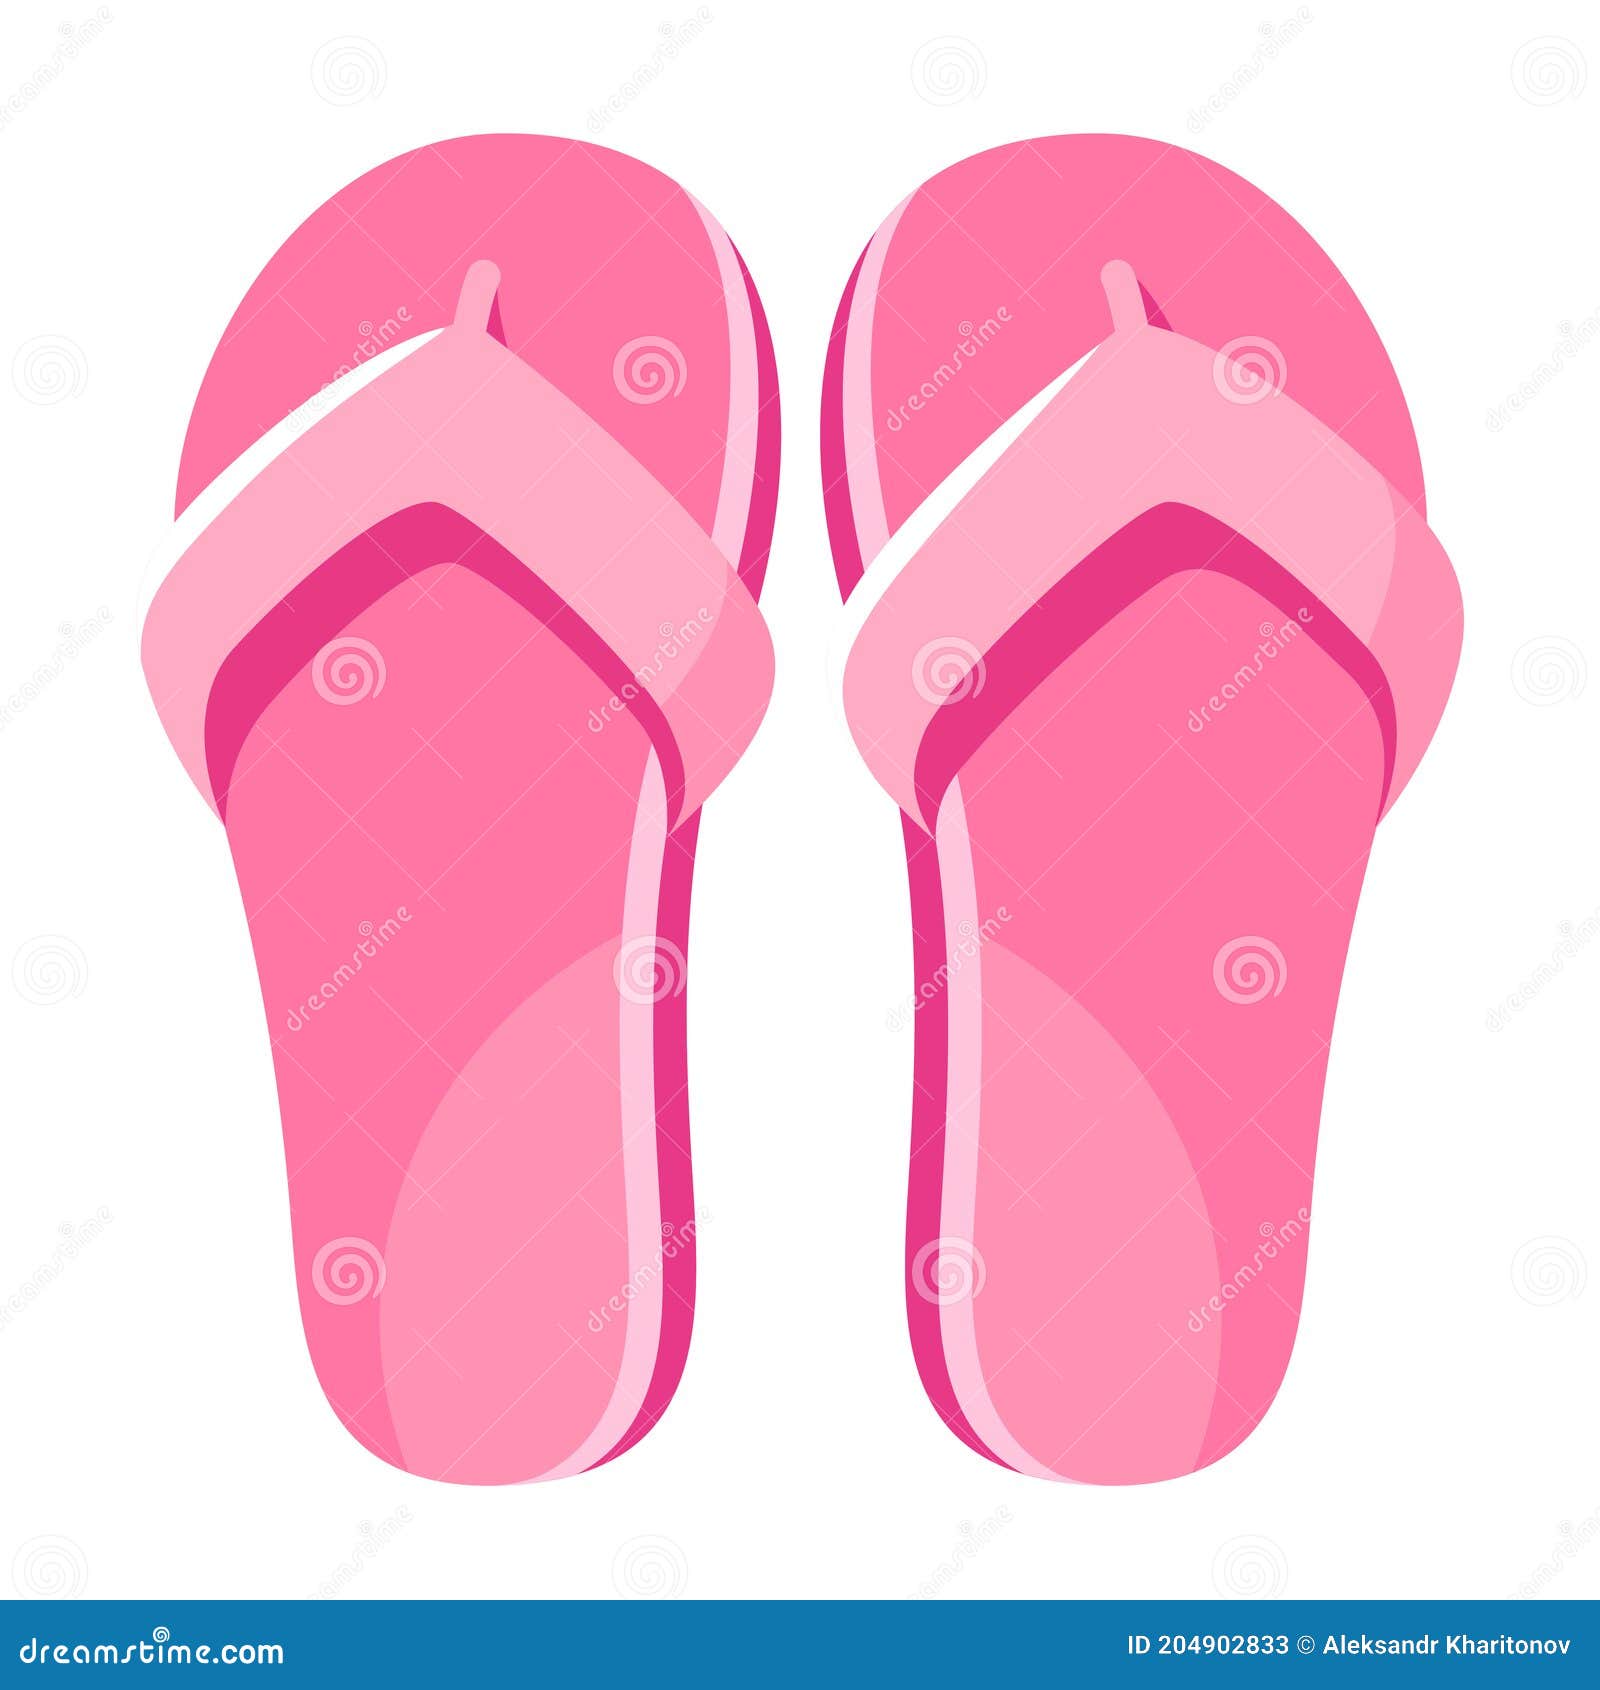 pink jandals  flip flop icon. female slim footwear for beach  bathroom  swimming pool